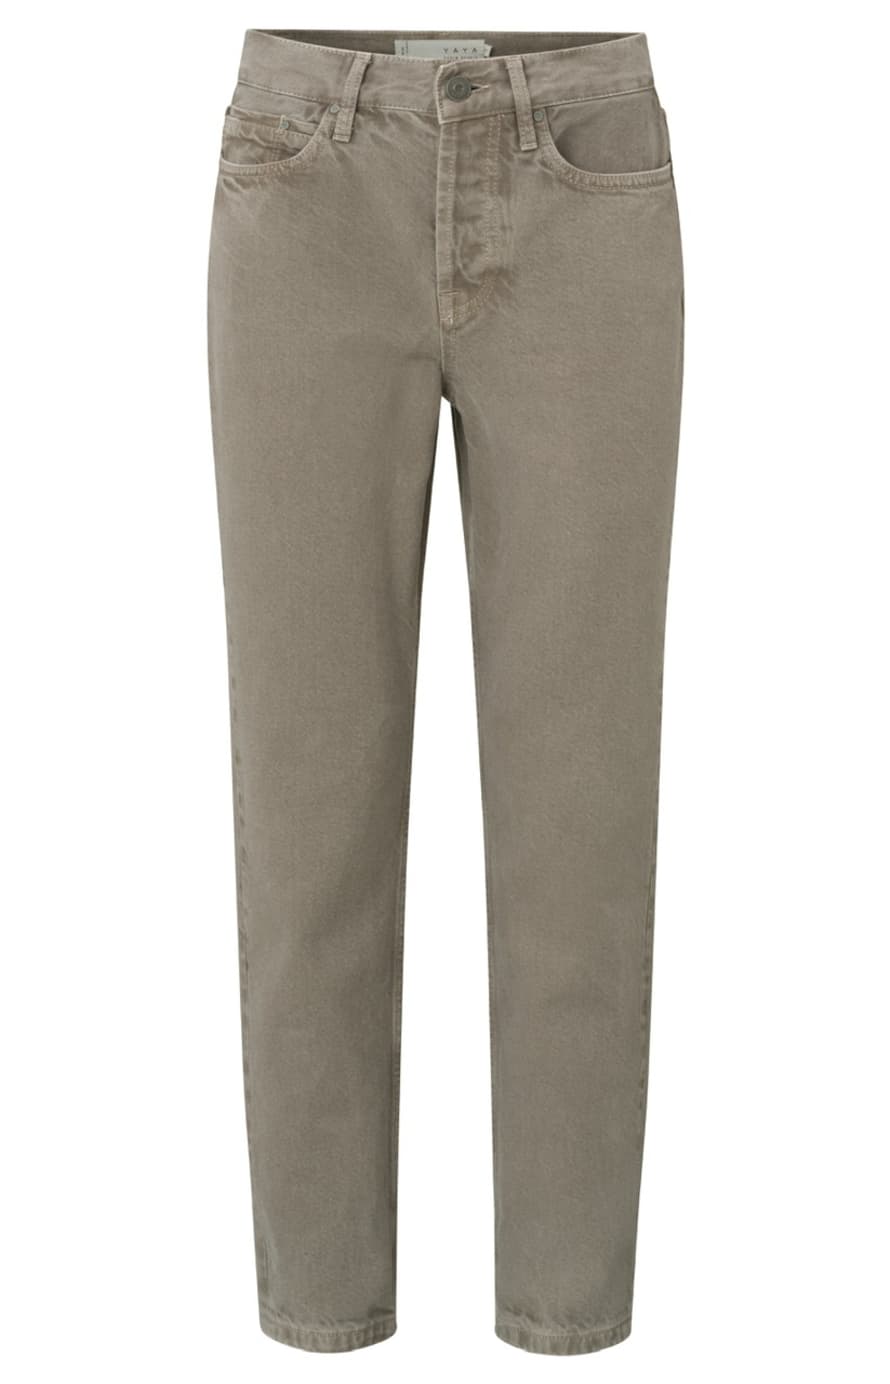 Yaya High Waist Denim Jeans with a straight leg and side pockets - Feather Grey